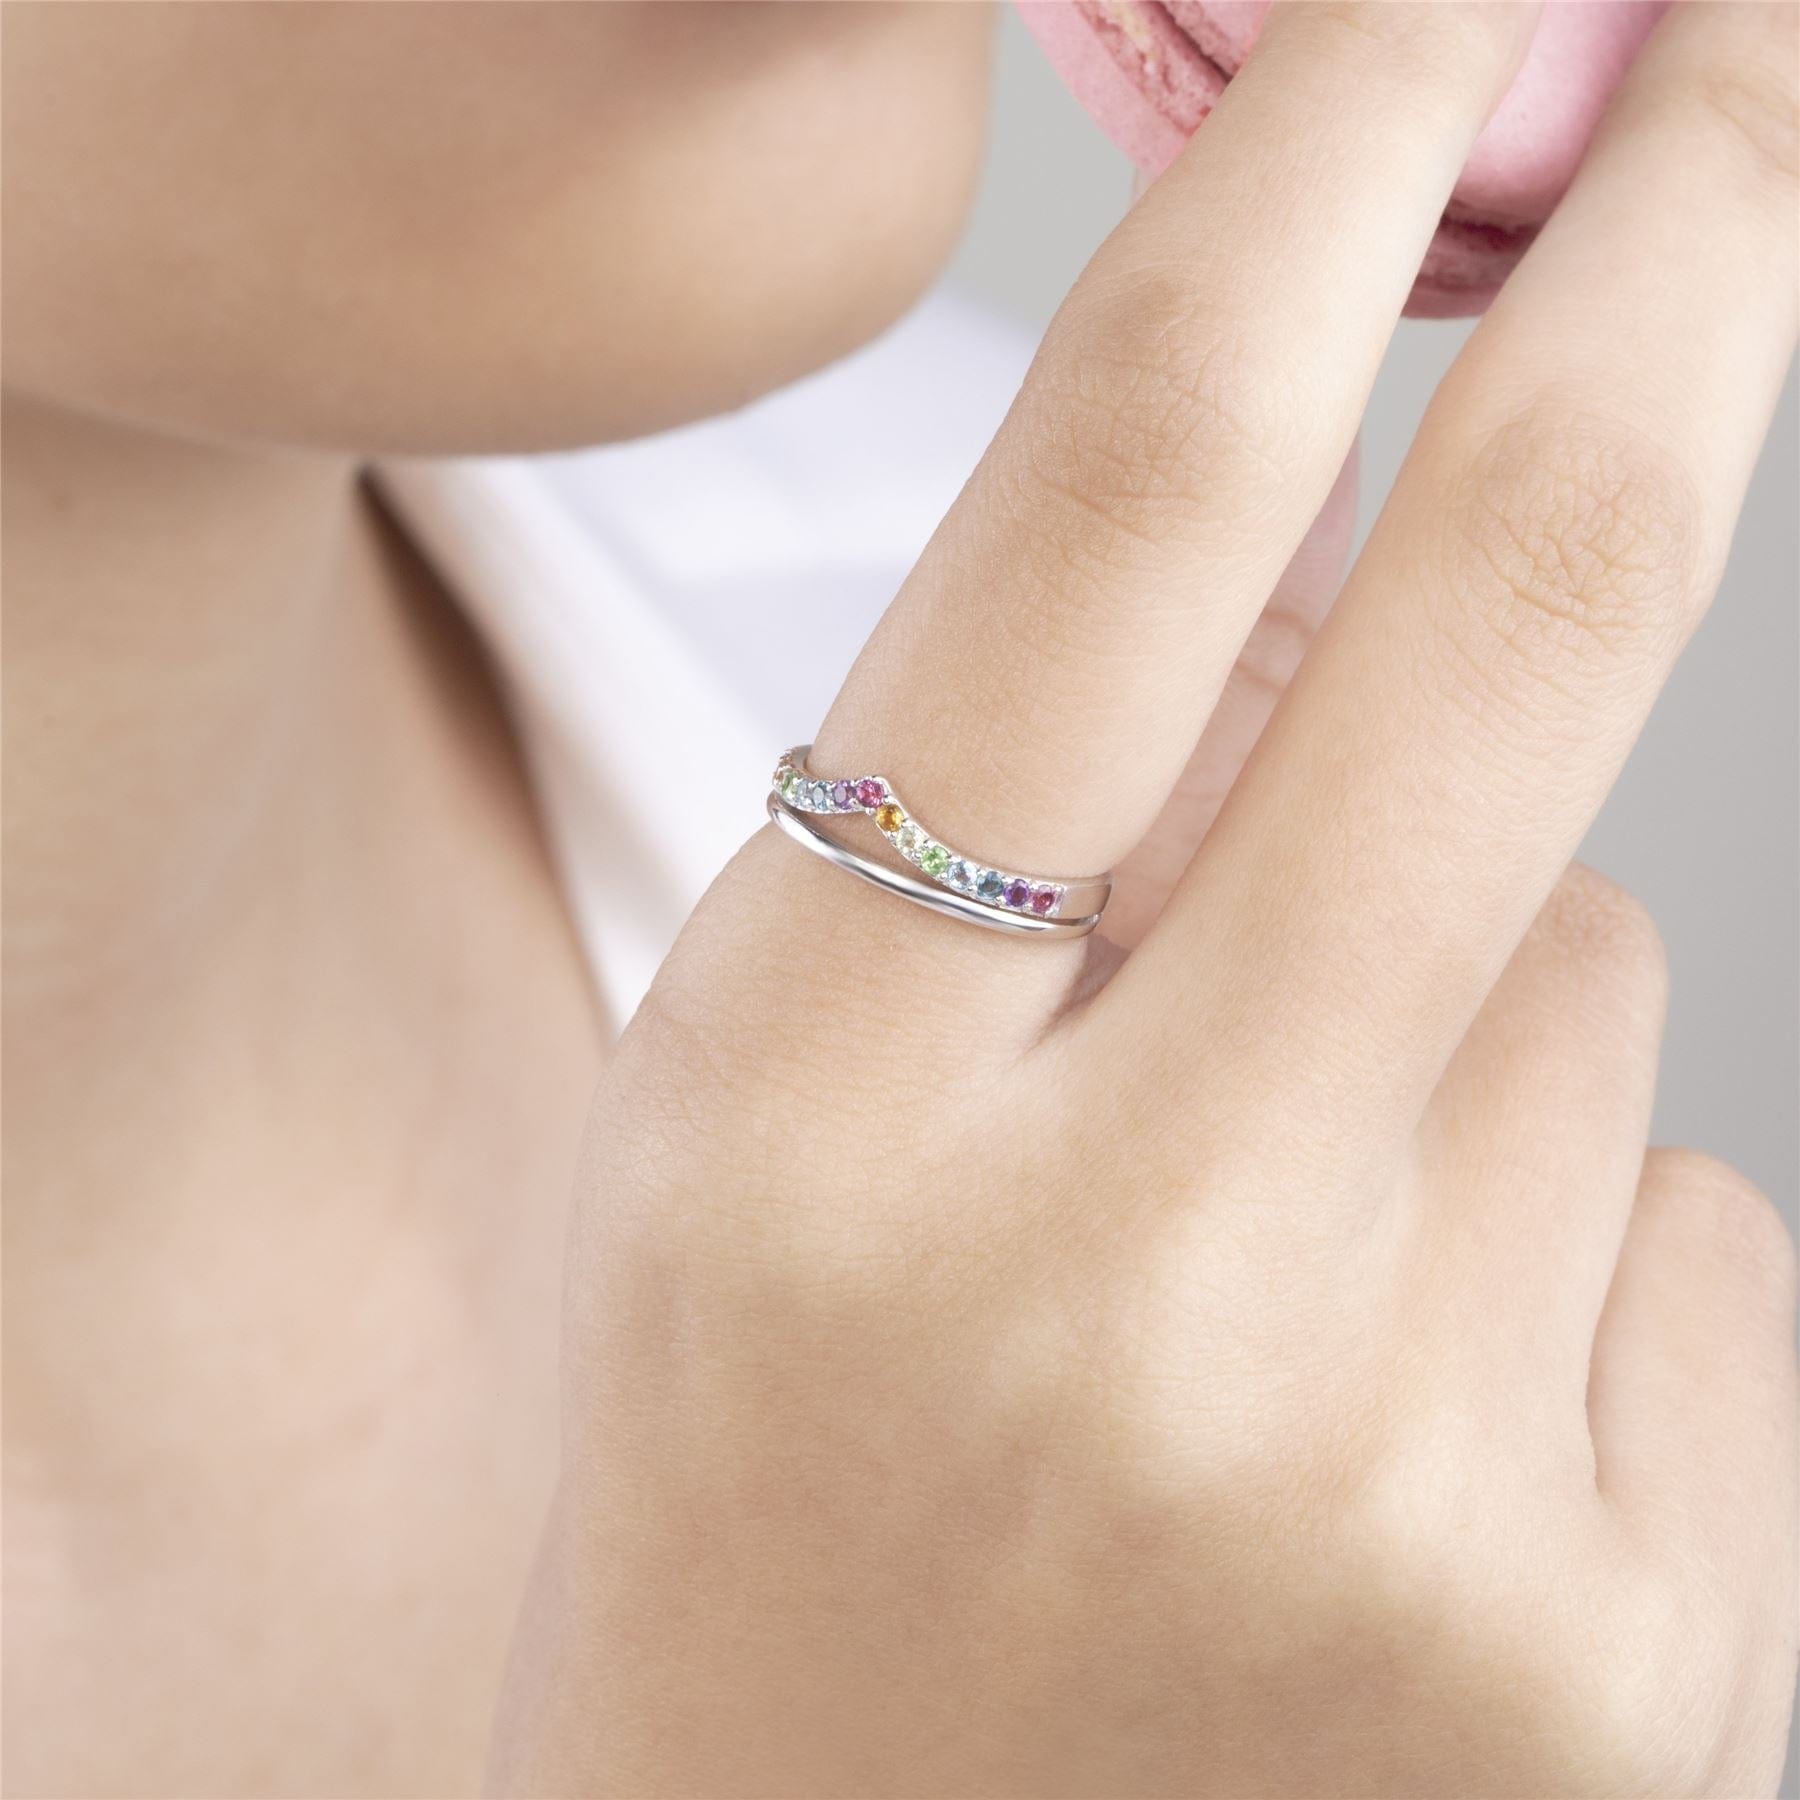 Rainbow Gemstone Wishbone Ring Style in 925 Sterling Silver on model